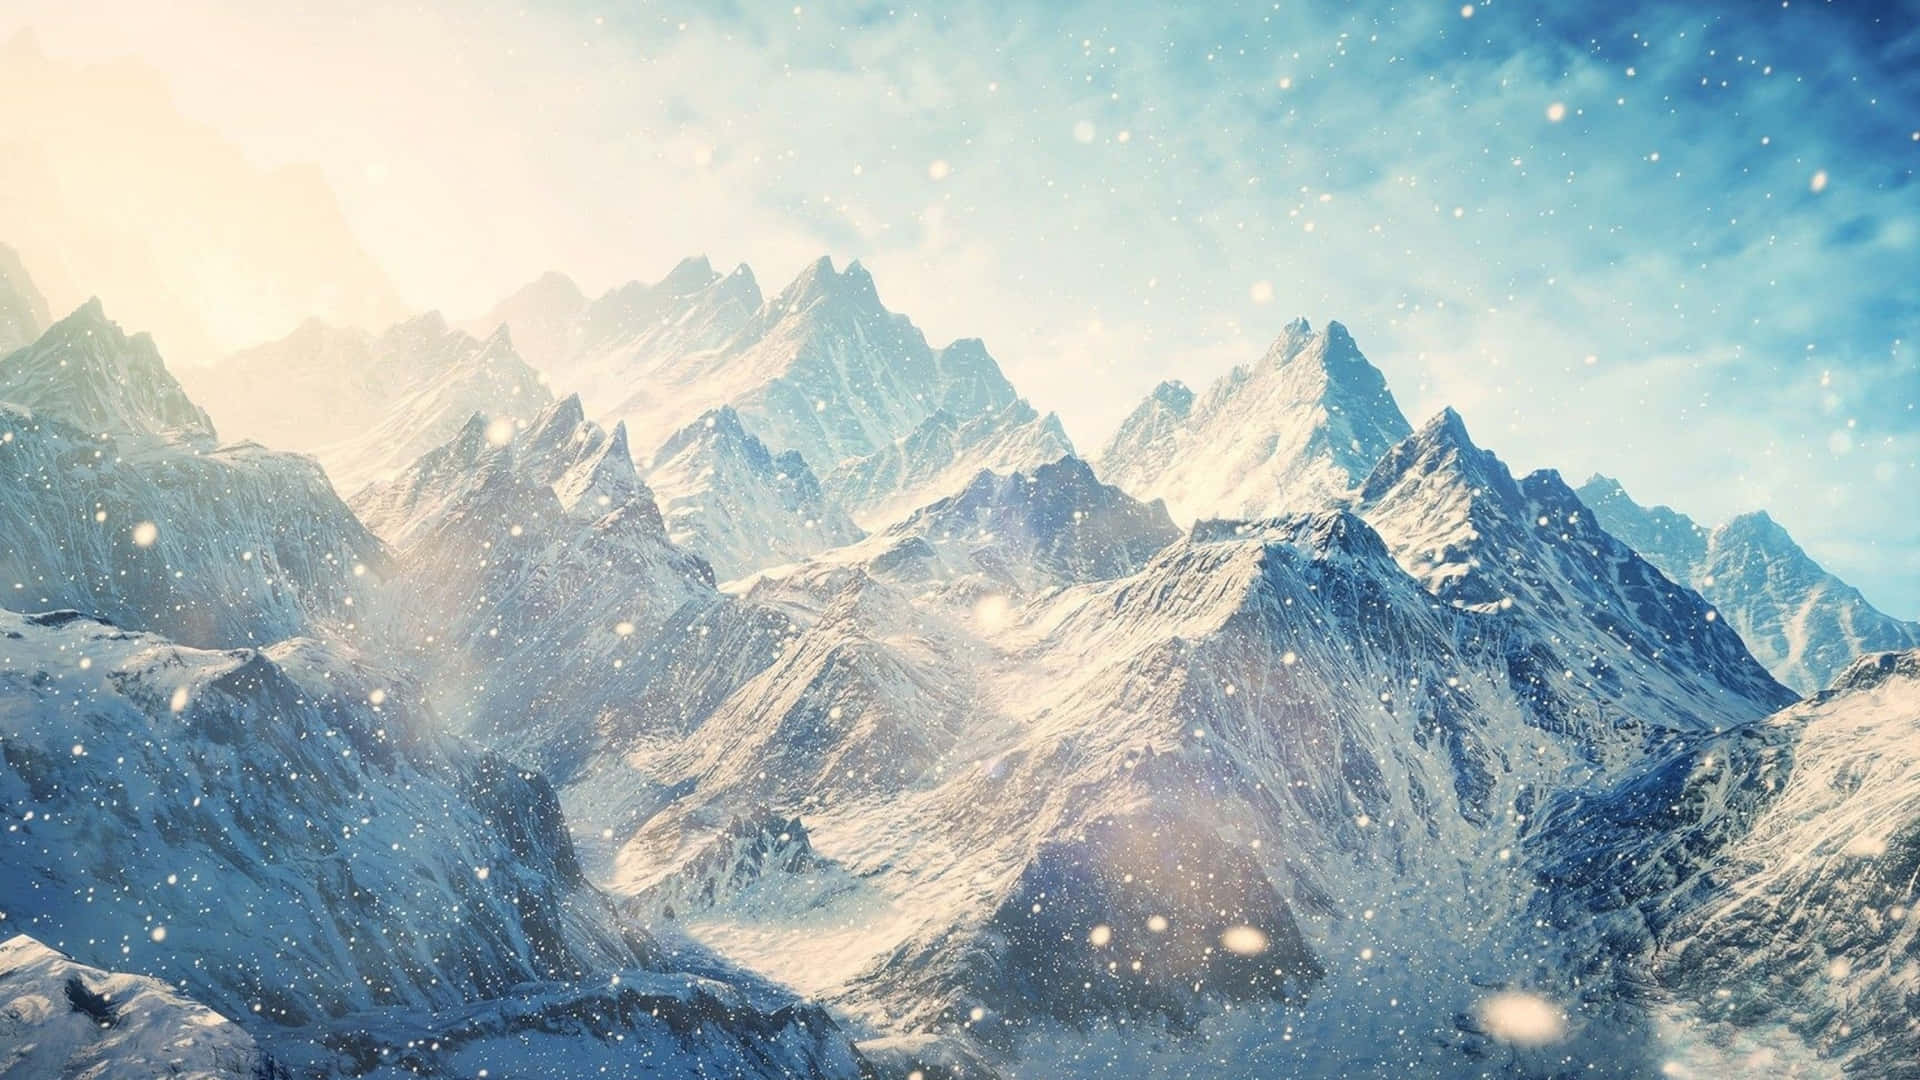 “The Majestic Splendor of Snow Mountain”